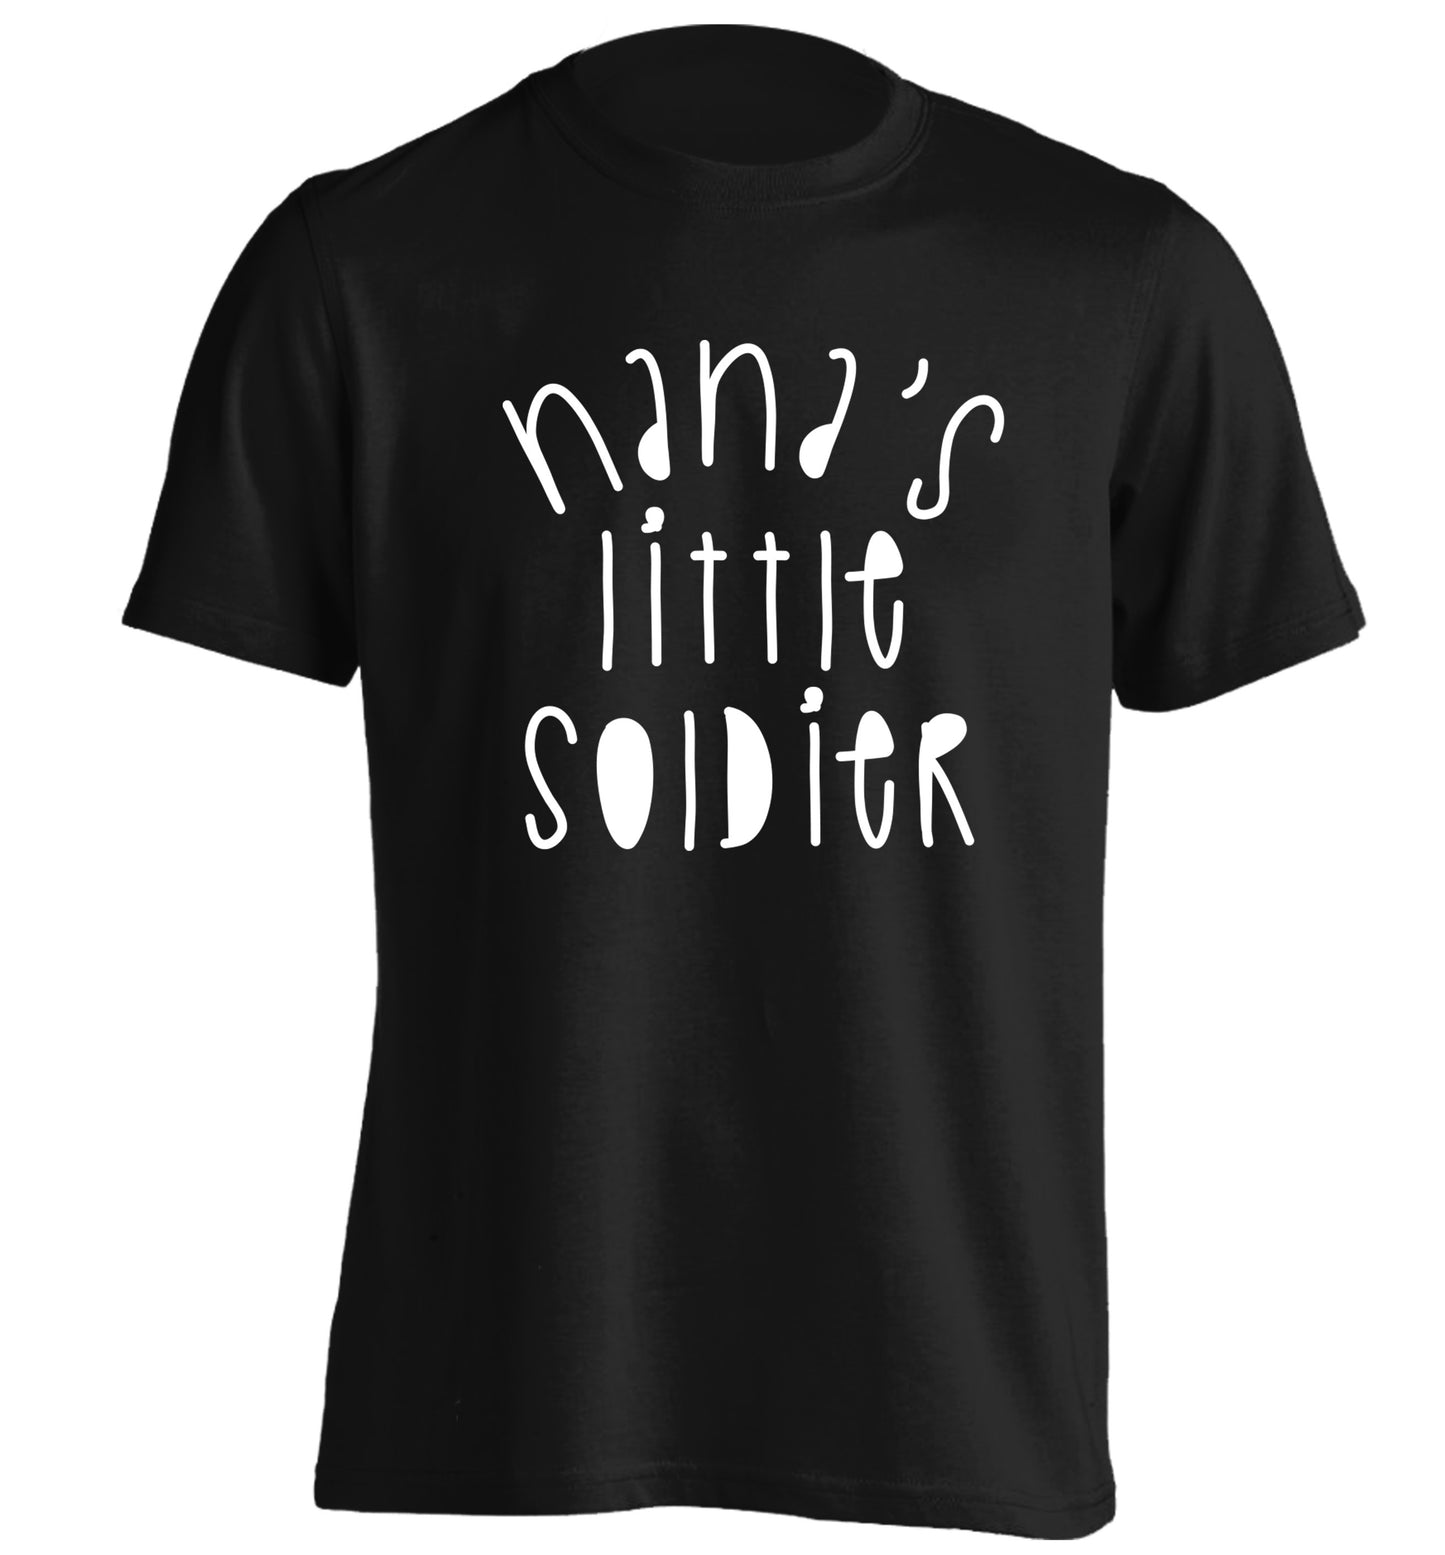 Nana's little soldier adults unisex black Tshirt 2XL